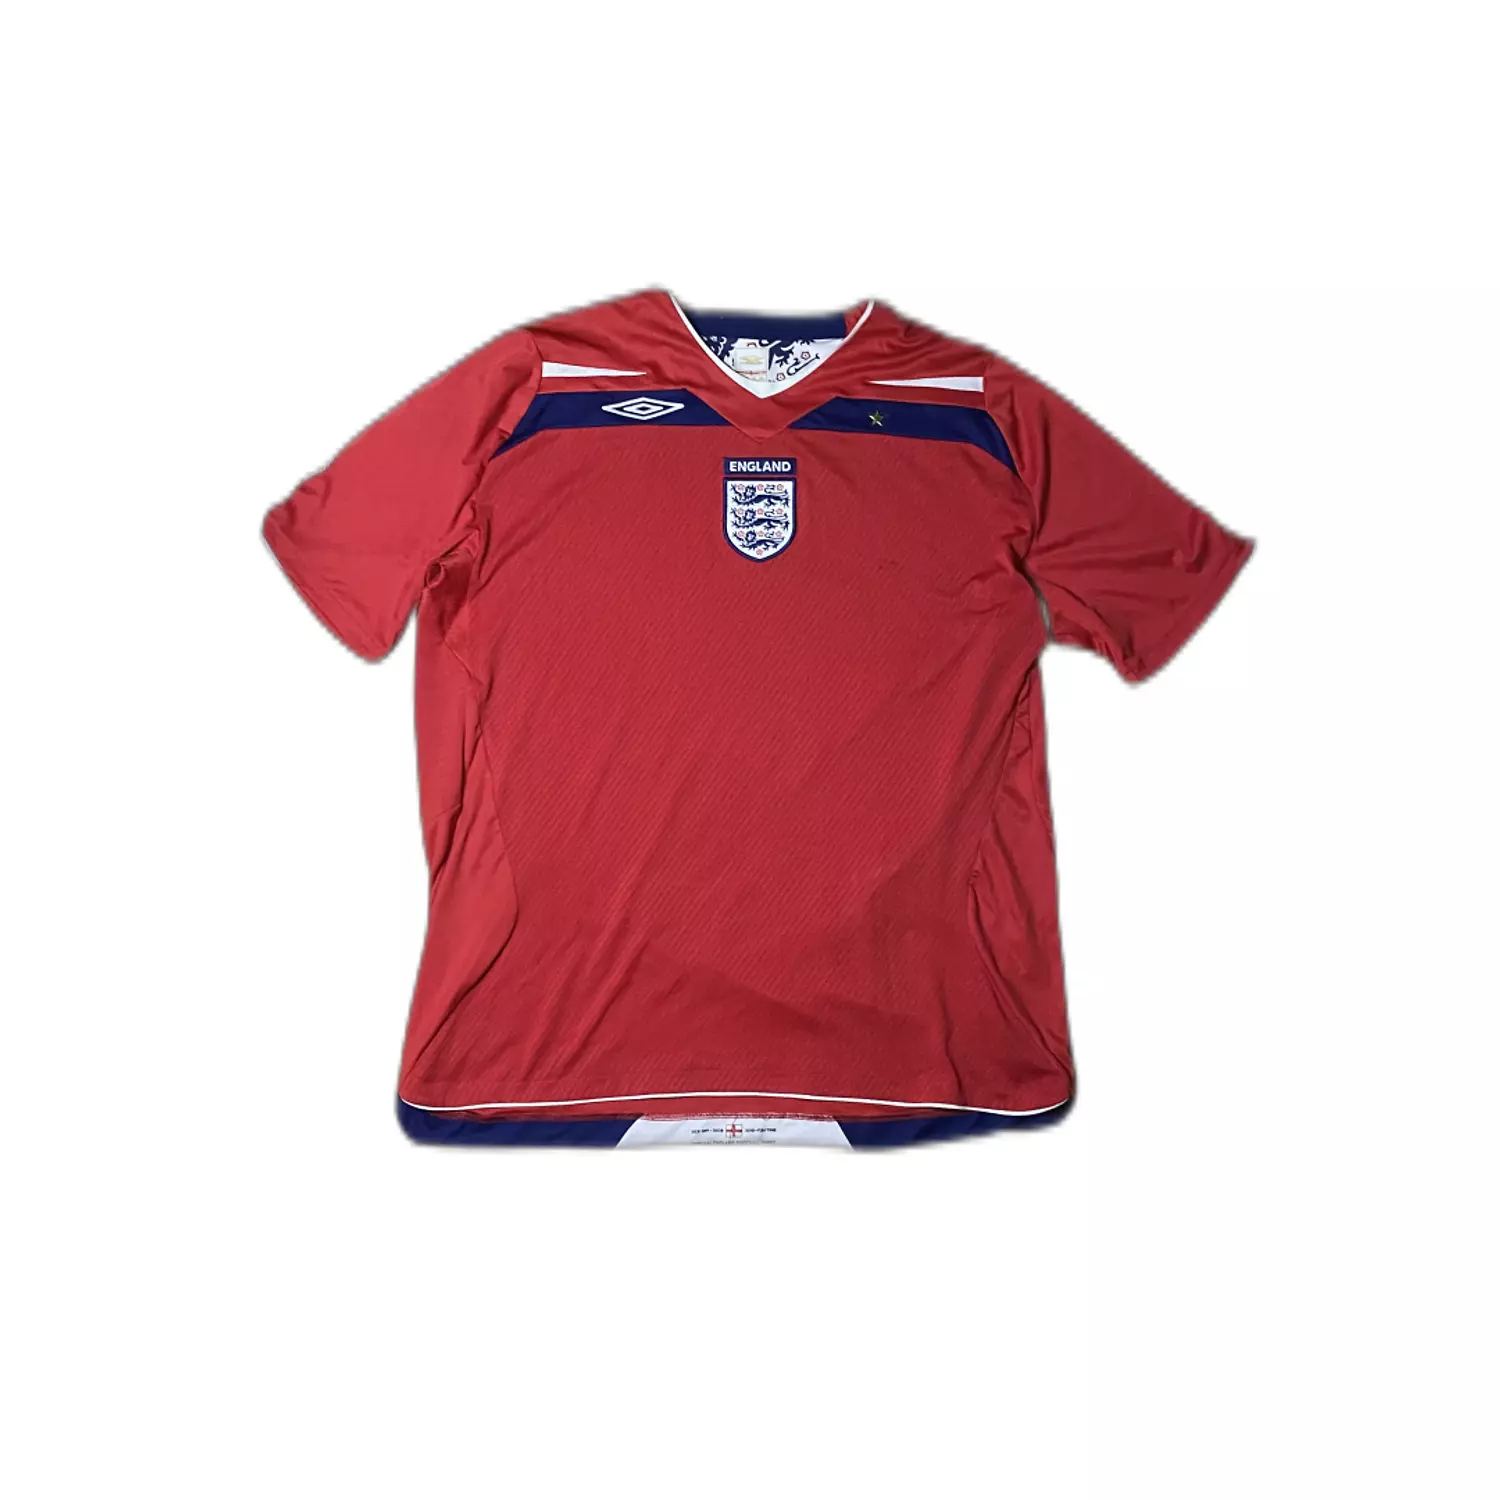 England 2008 Away Kit (XL)  hover image